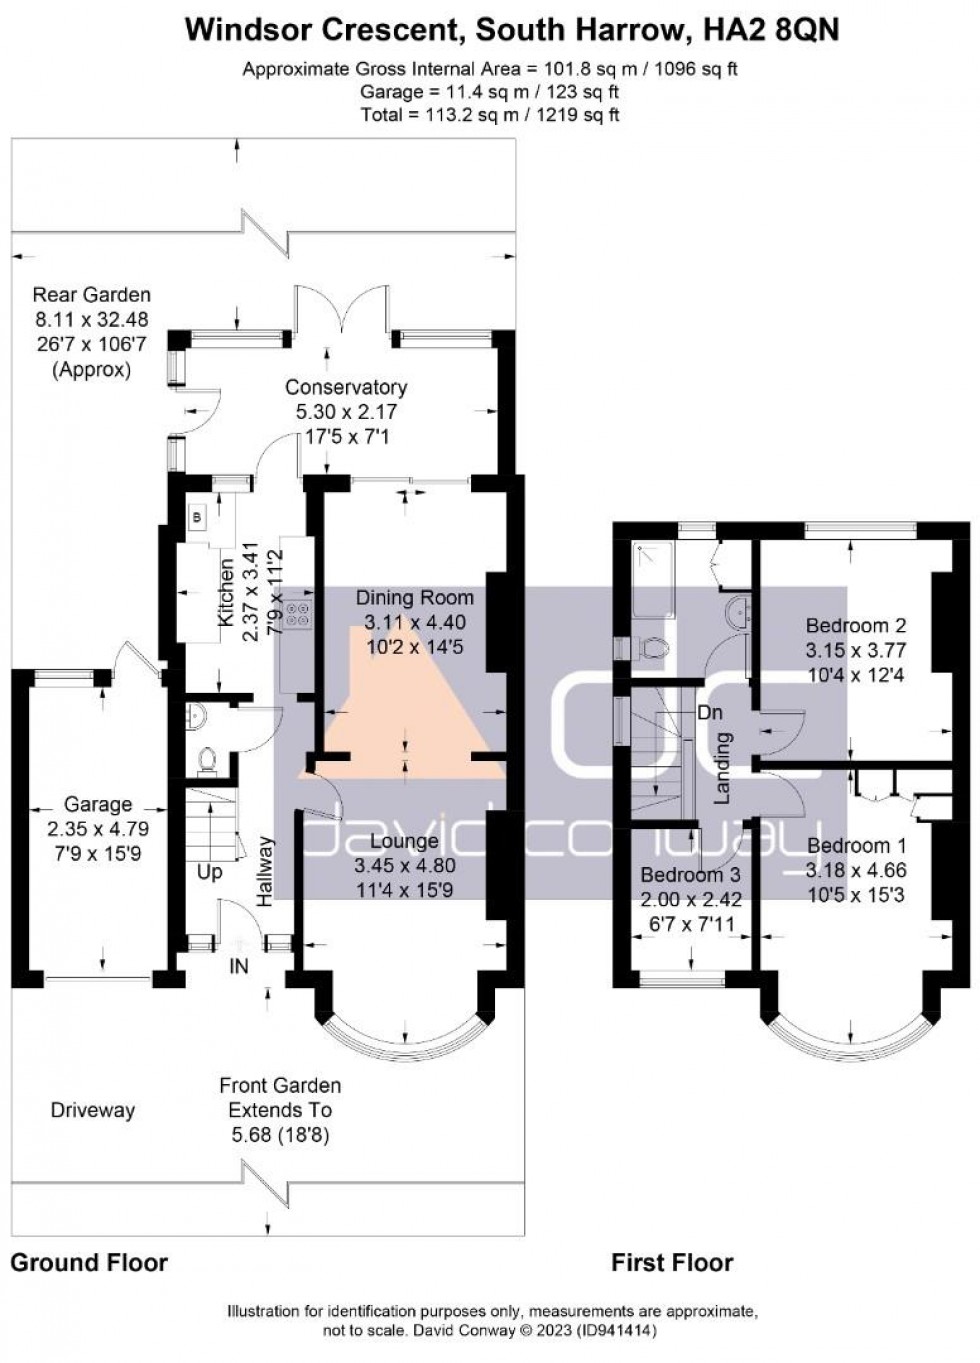 Floorplan for Windsor Crescent, Harrow, HA2 8QN